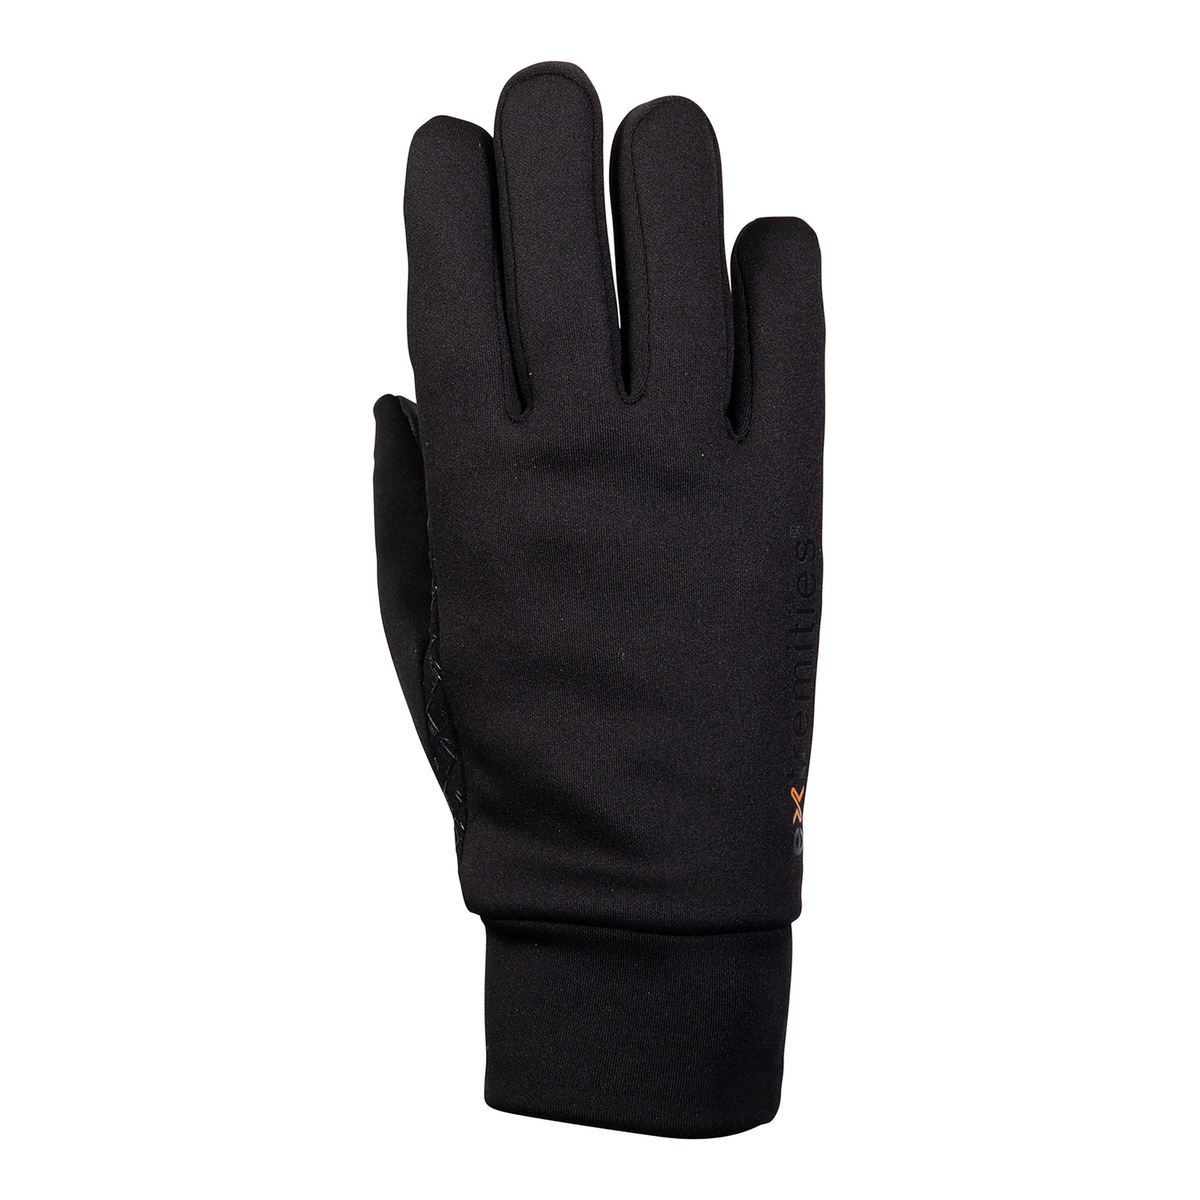 Extremities Sticky Waterproof Power Liner Glove - Black